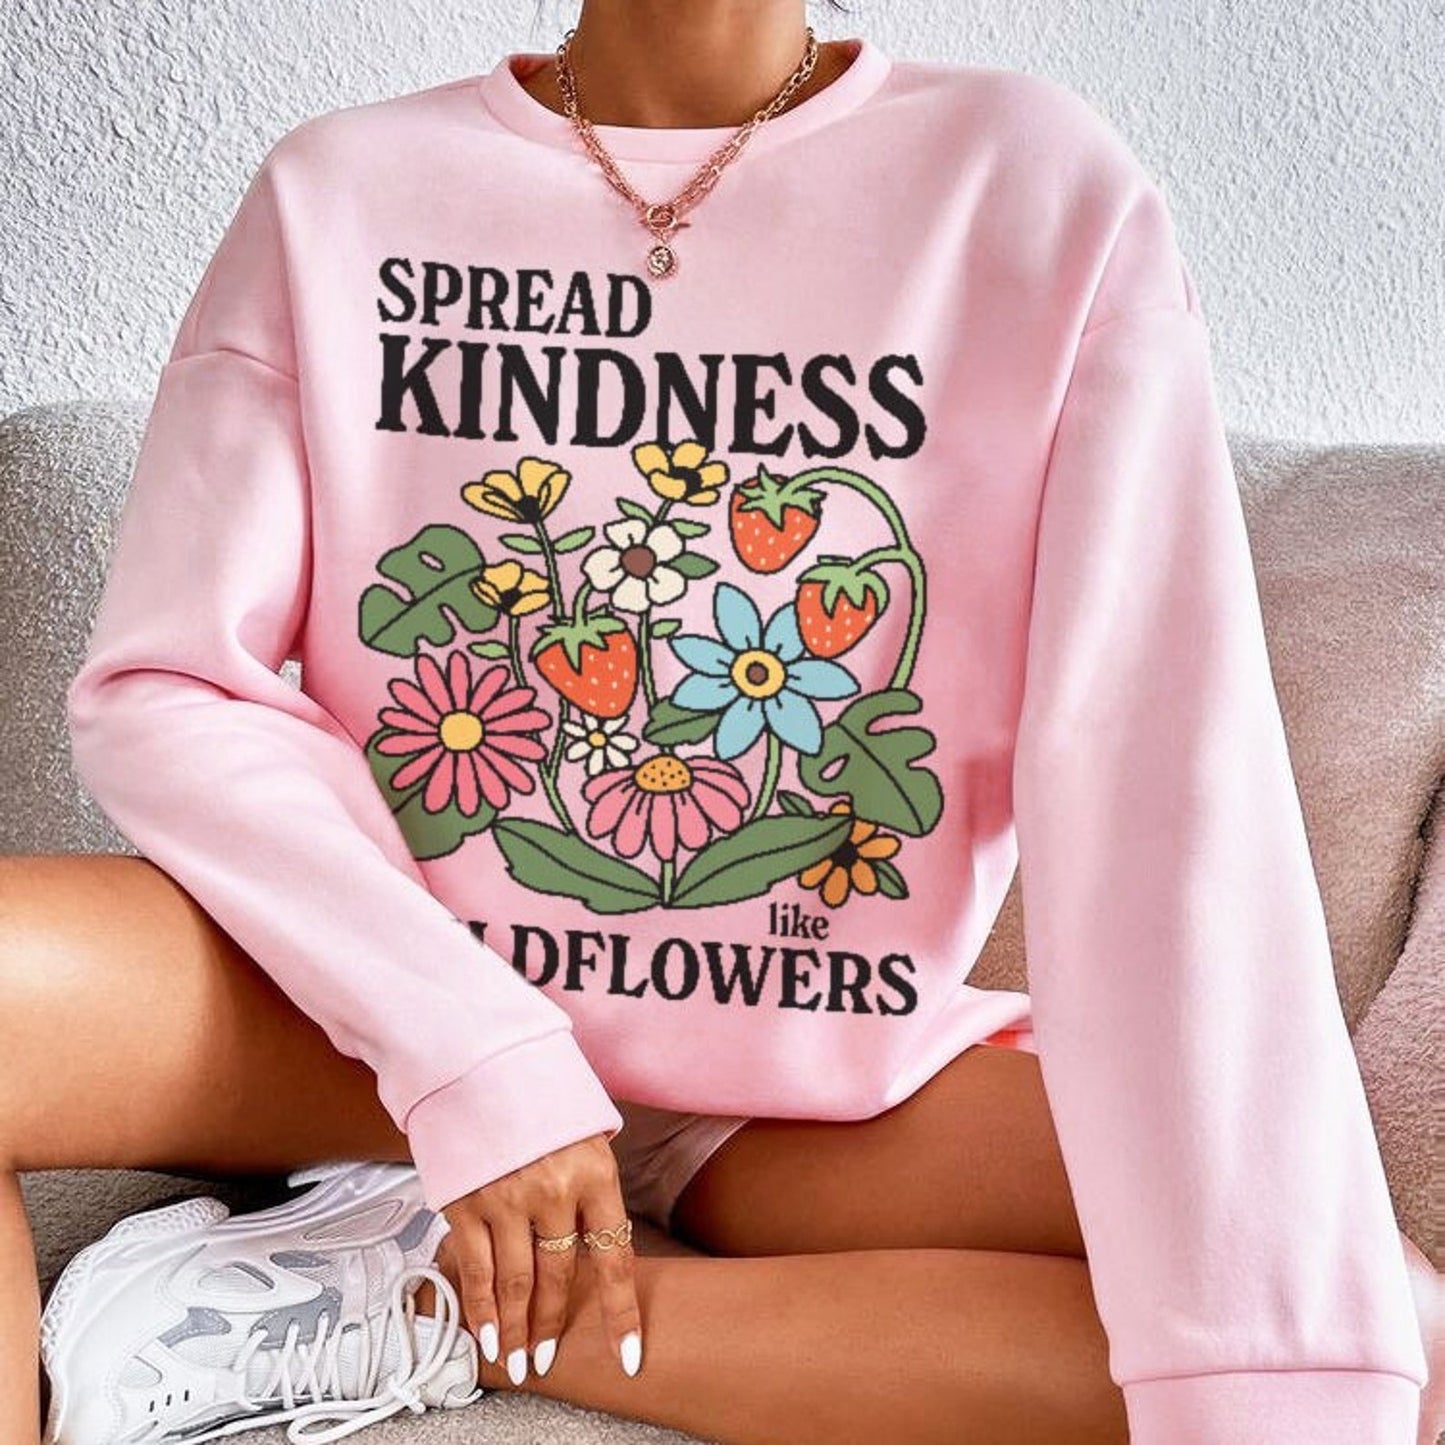 'Spread Kindness like wildflowers' Sweatshirt